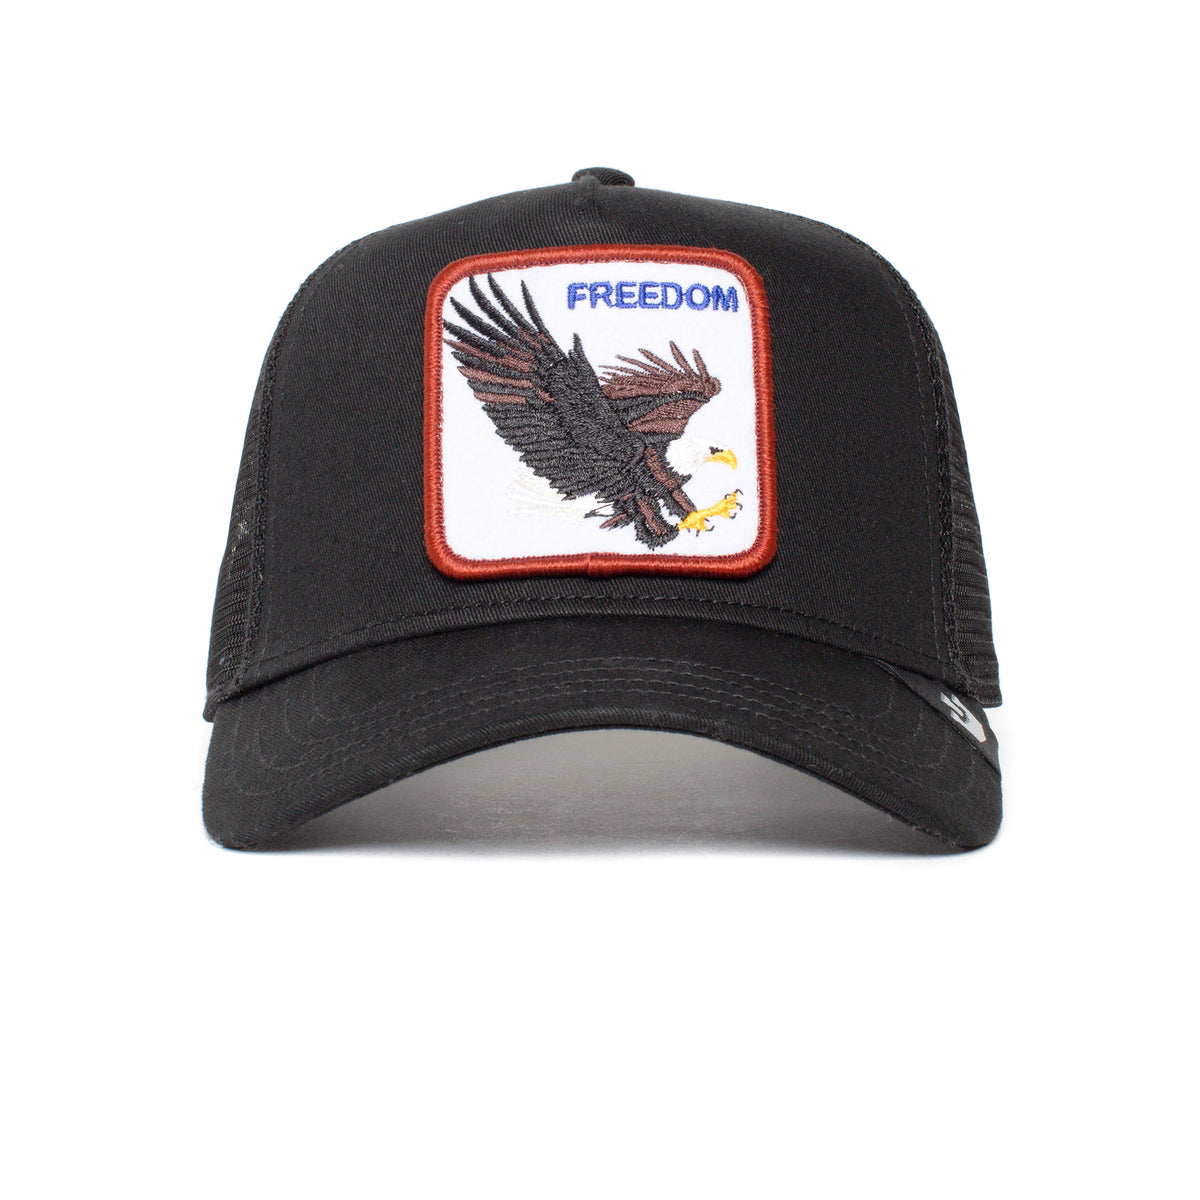 Goorin Bros - The Freedom Eagle Trucker Cap - Black